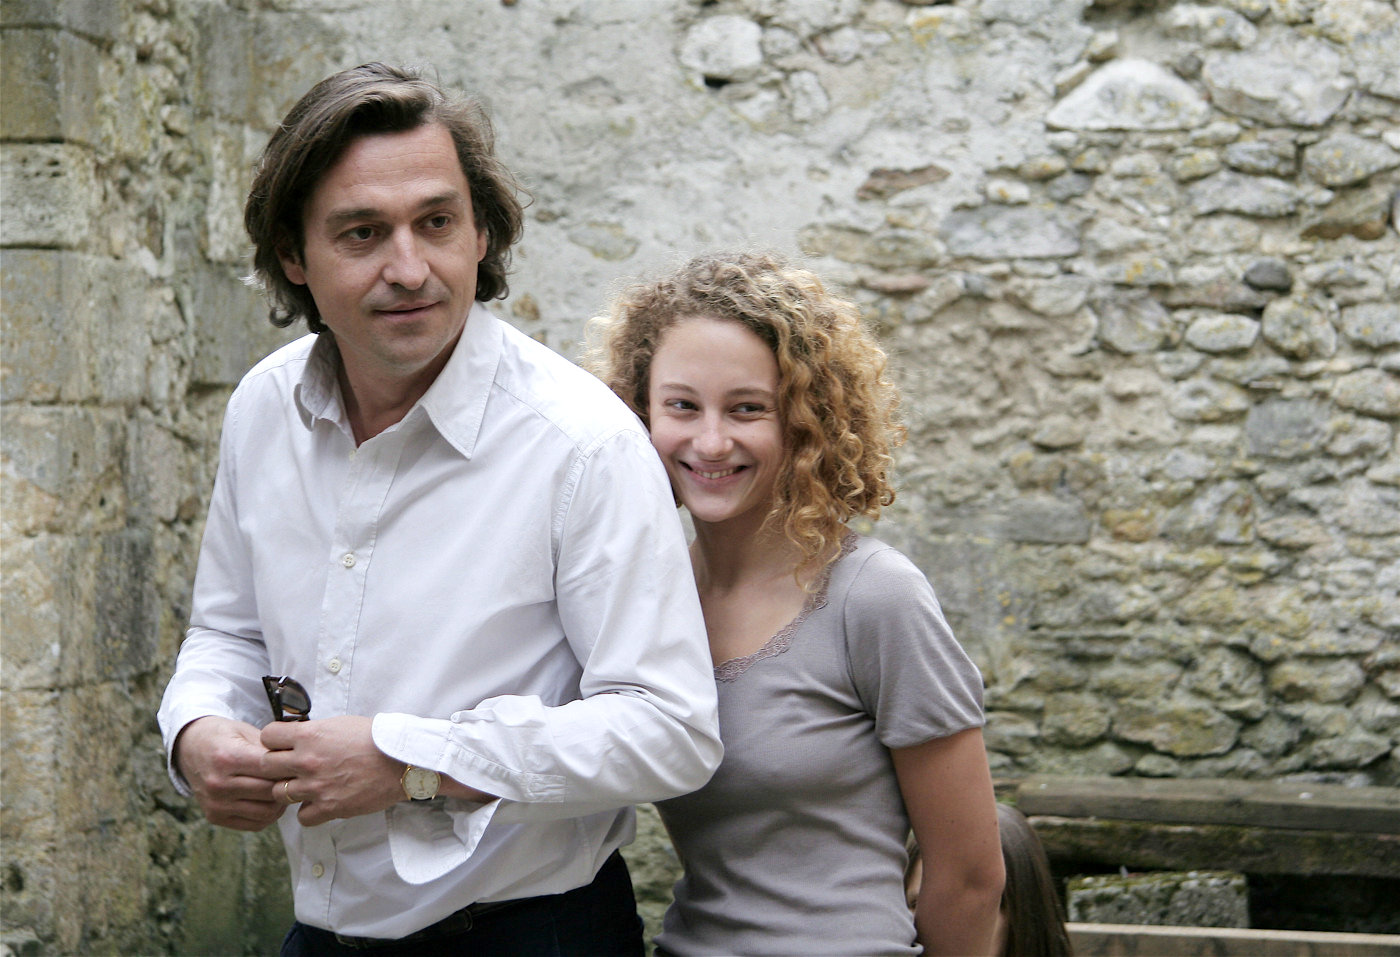 Louis-Do de Lencquesain stars as Gregoire Canvel and Alice de Lencquesaing stars as Clemence Canvel in IFC Films' The Father of My Children (2010)